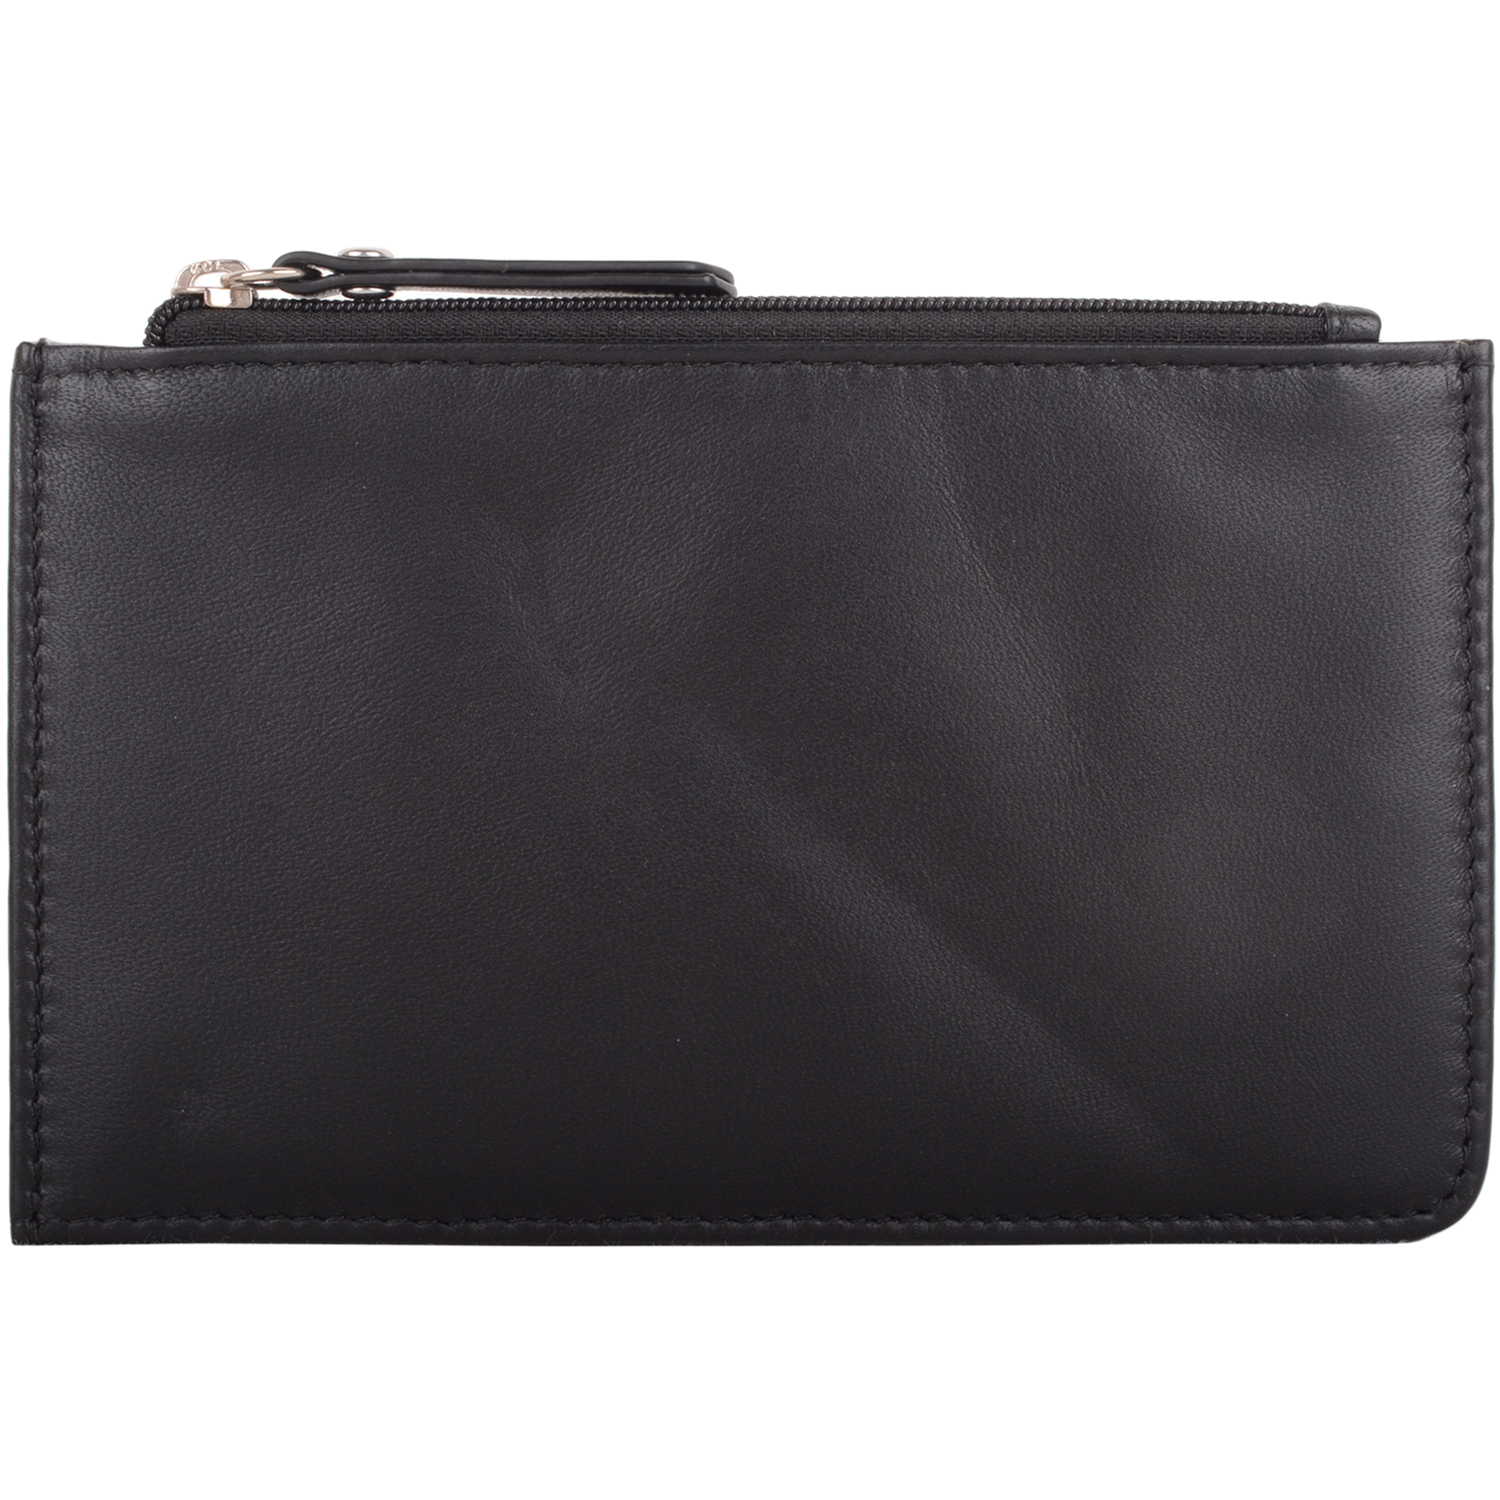 Generic Men's Coin Purse Wallet Fashion RFID Blocking Man Leather Wallet  Zipper Business Card Holder ID Money Bag Wallet Male @ Best Price Online |  Jumia Kenya